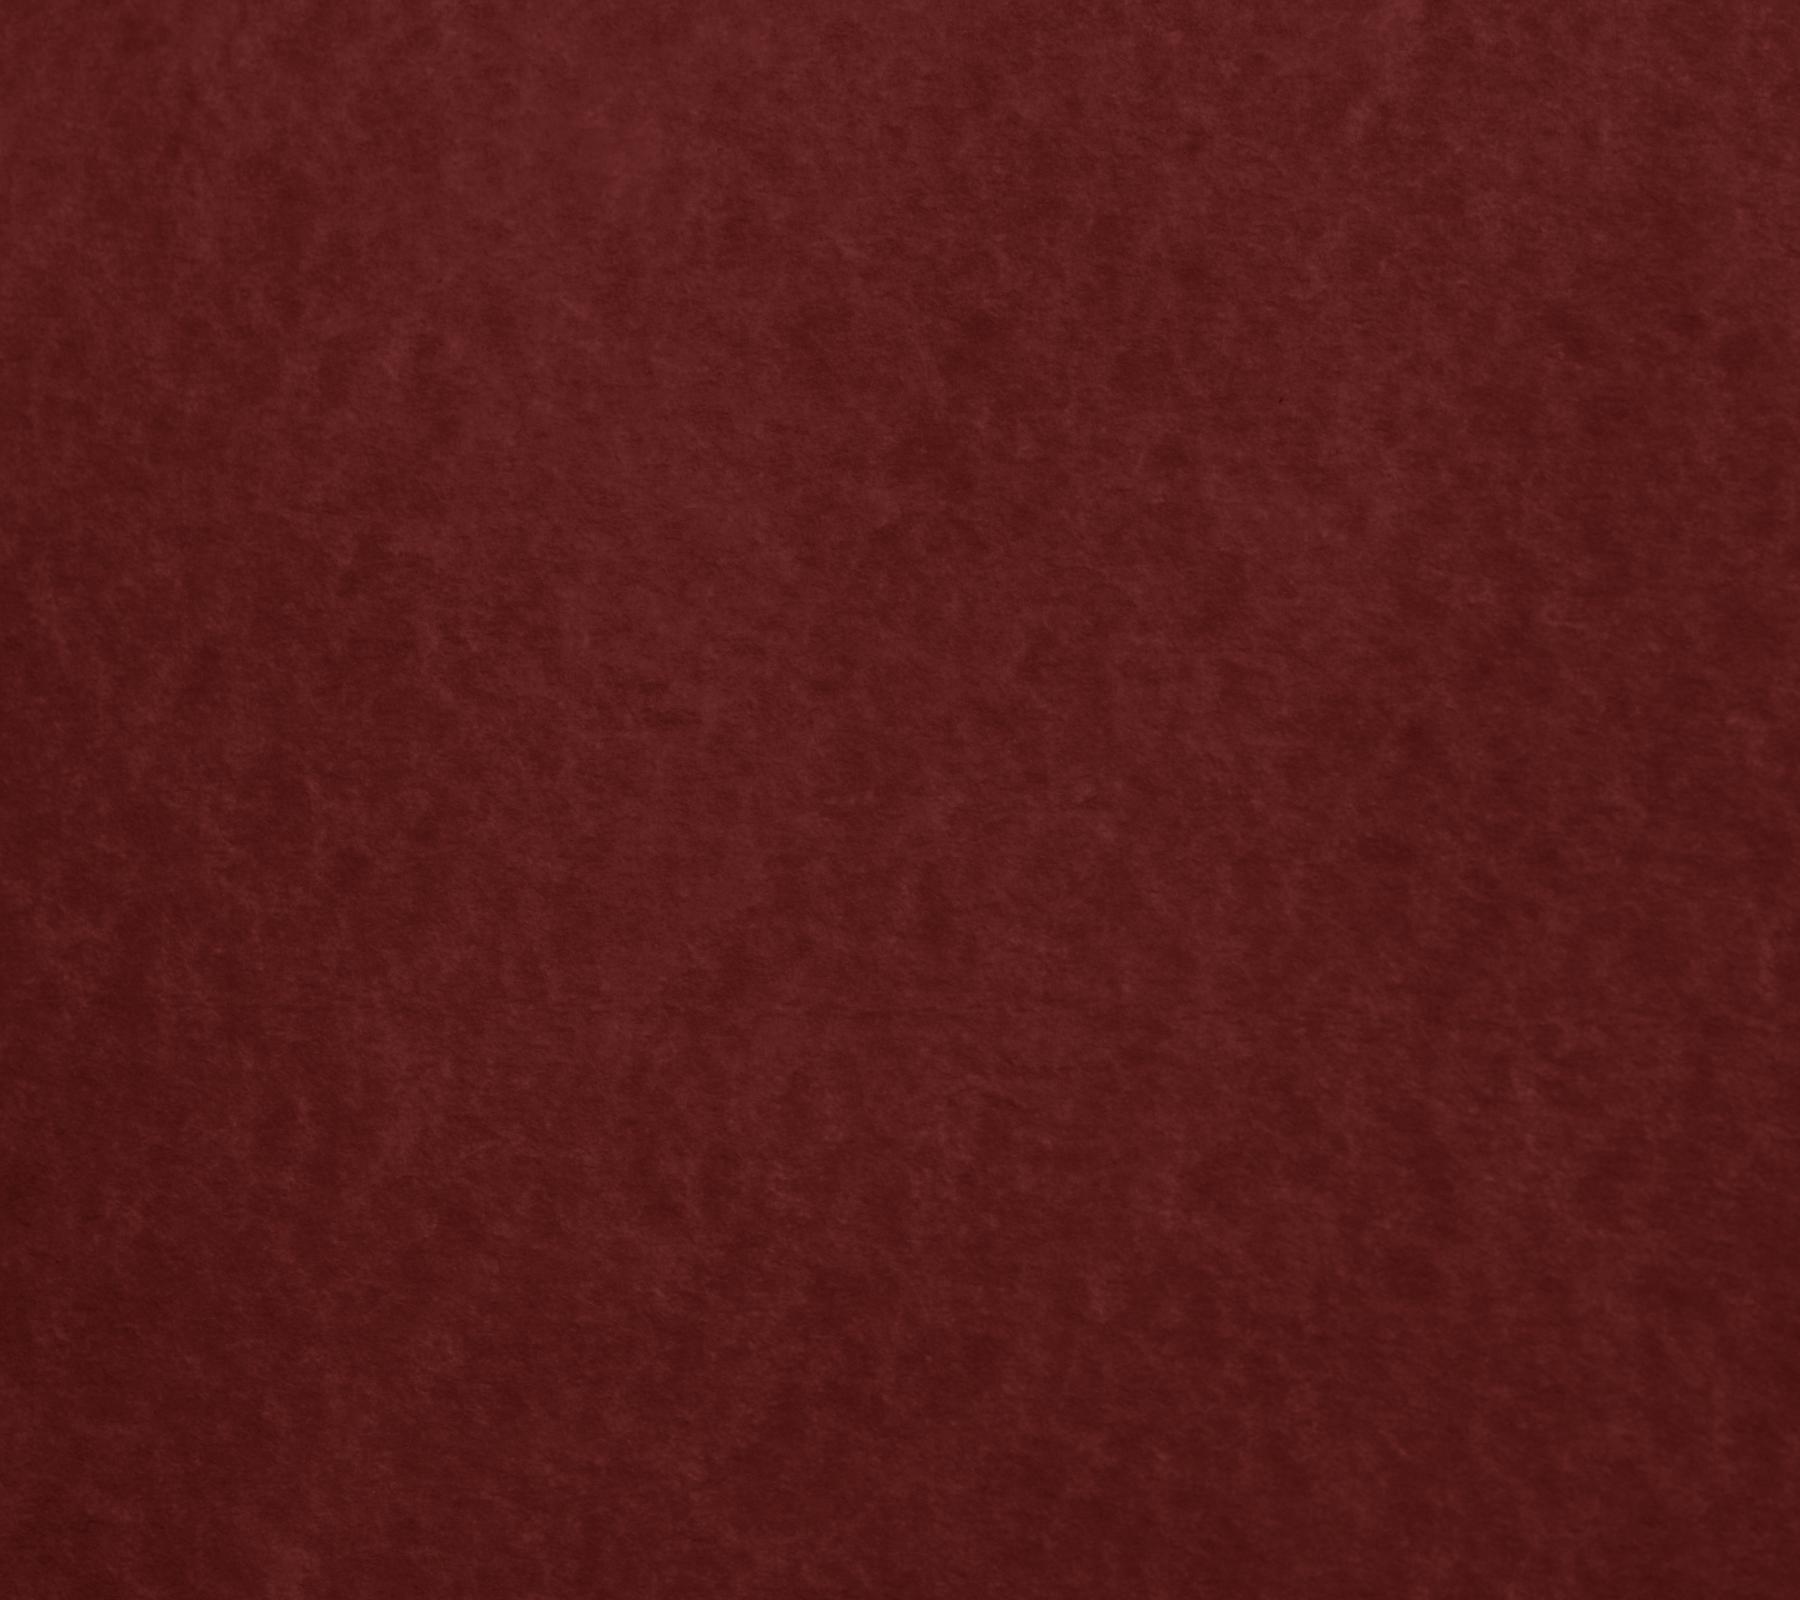 20+ Ide Background Merah Maroon Polos - Gambar Keren